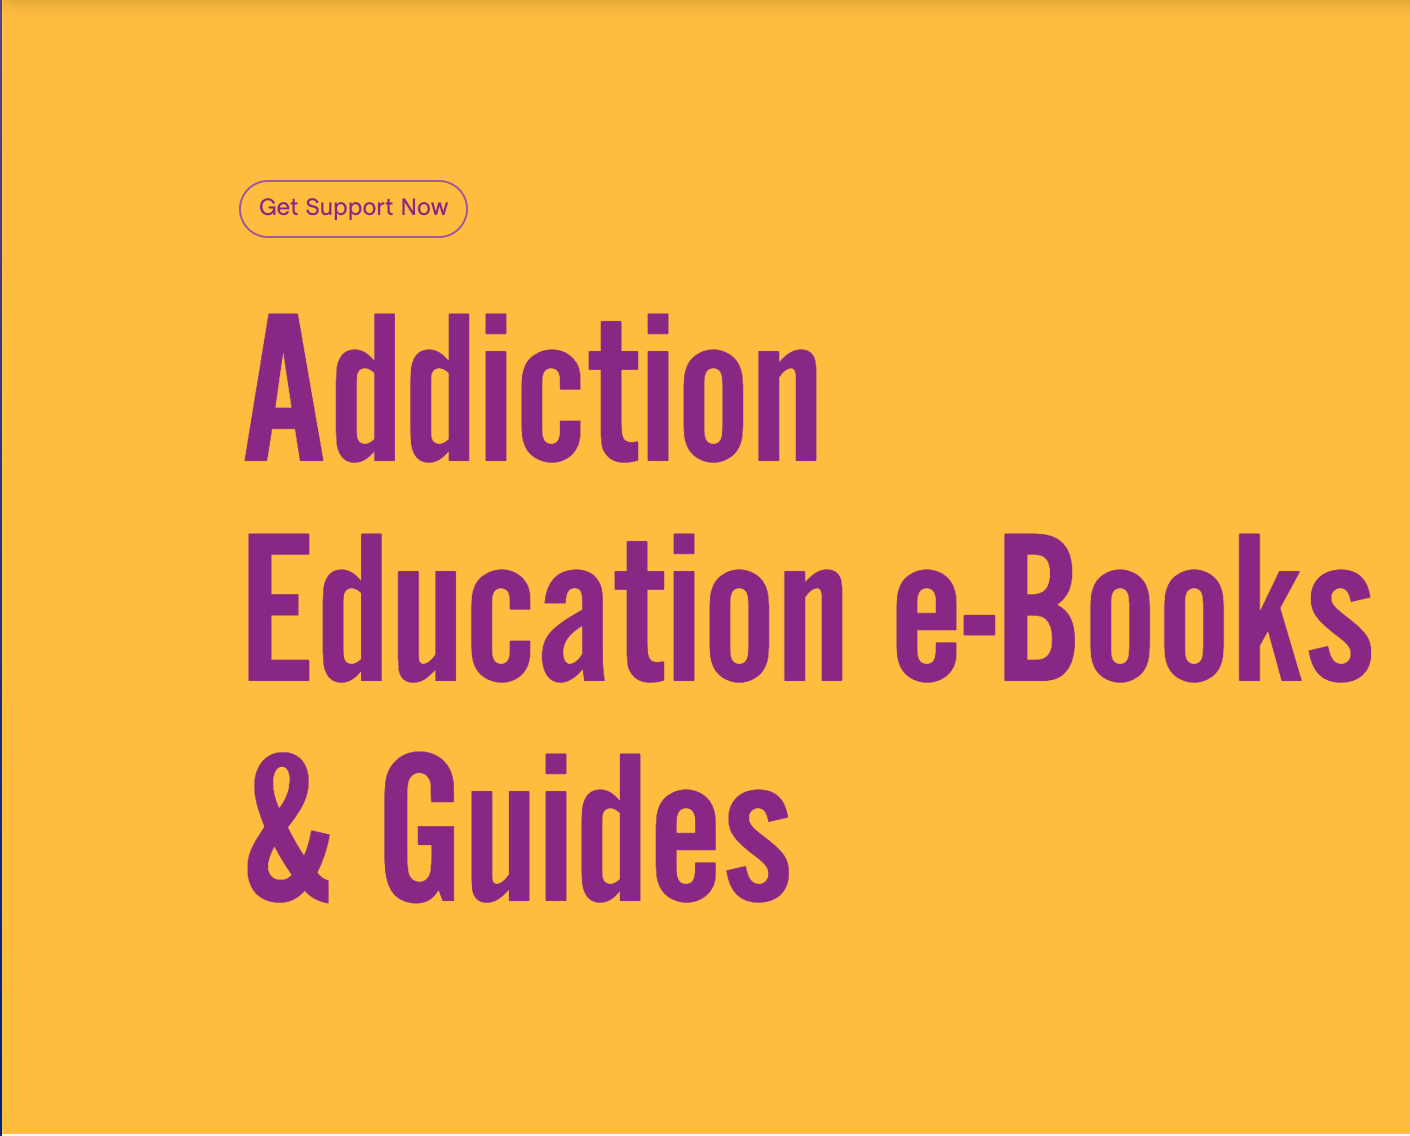 Addiction Education e-Books & Guides cover